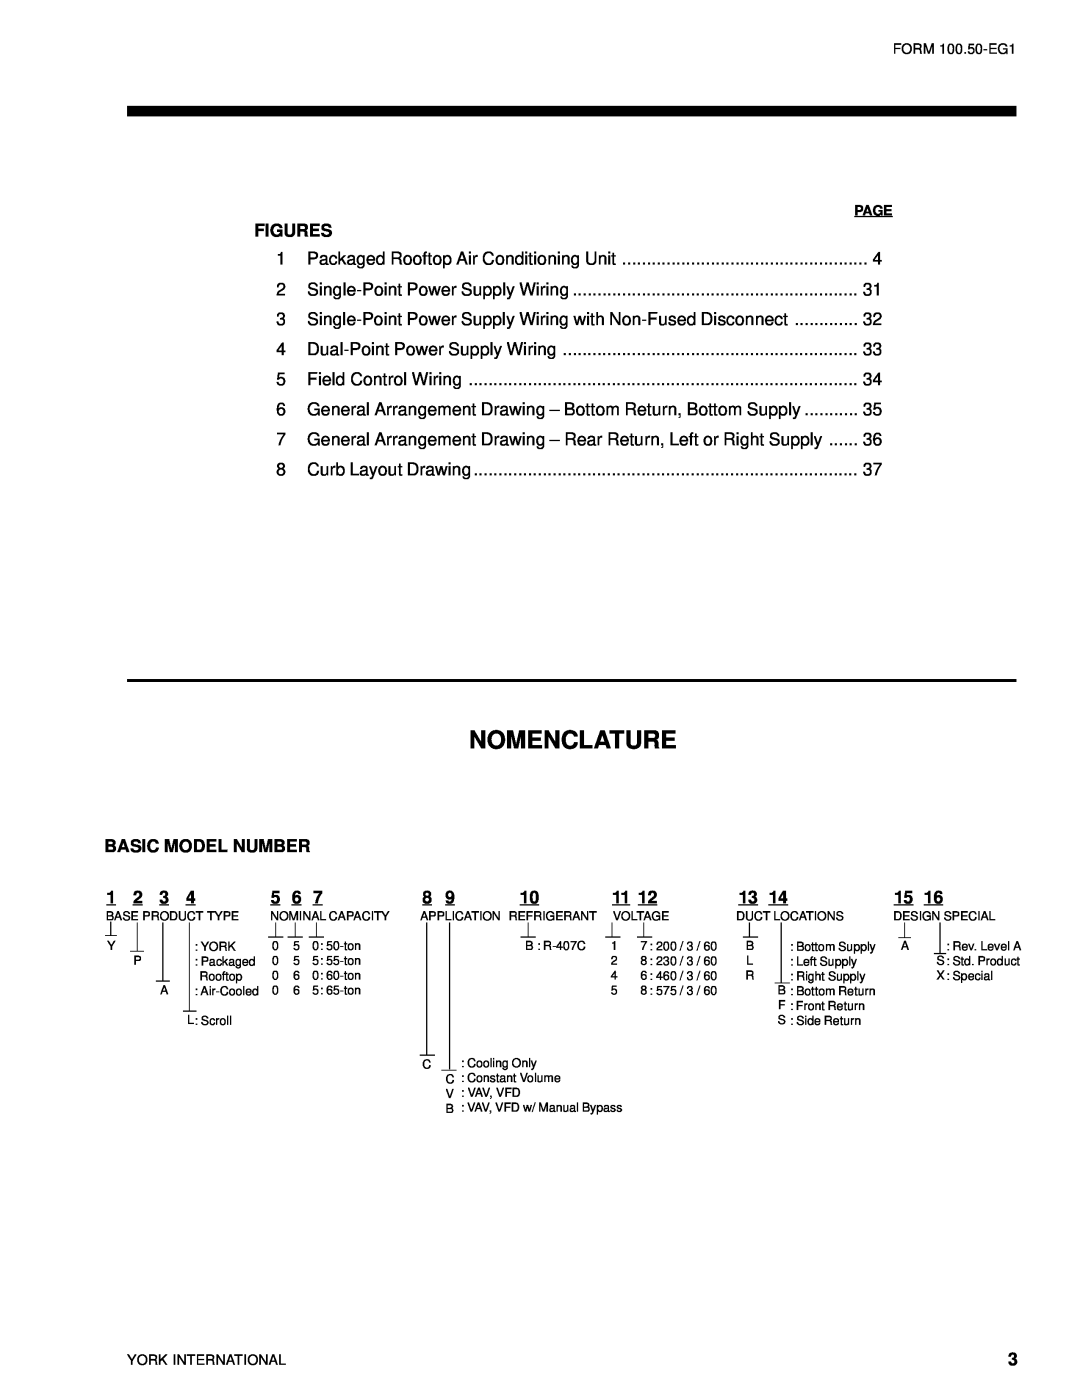 York R-407C manual Nomenclature, Figures, Basic Model Number 